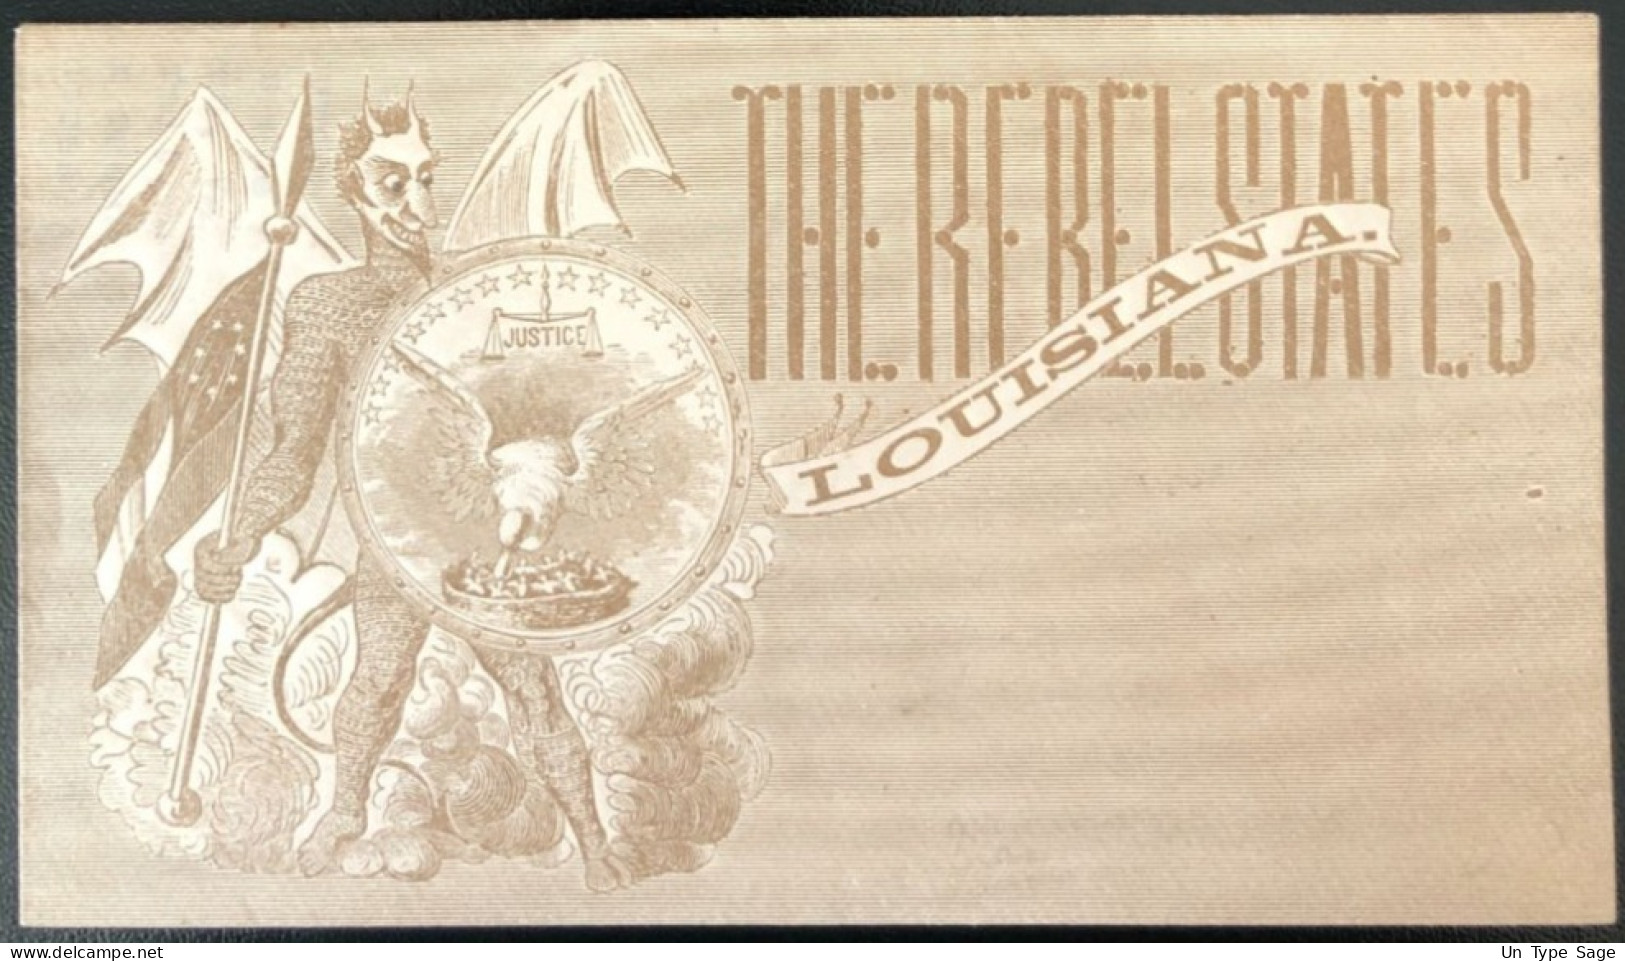 U.S.A, Civil War, Patriotic Cover - "The Rebel States / Louisiana" - Unused - (C438) - Postal History